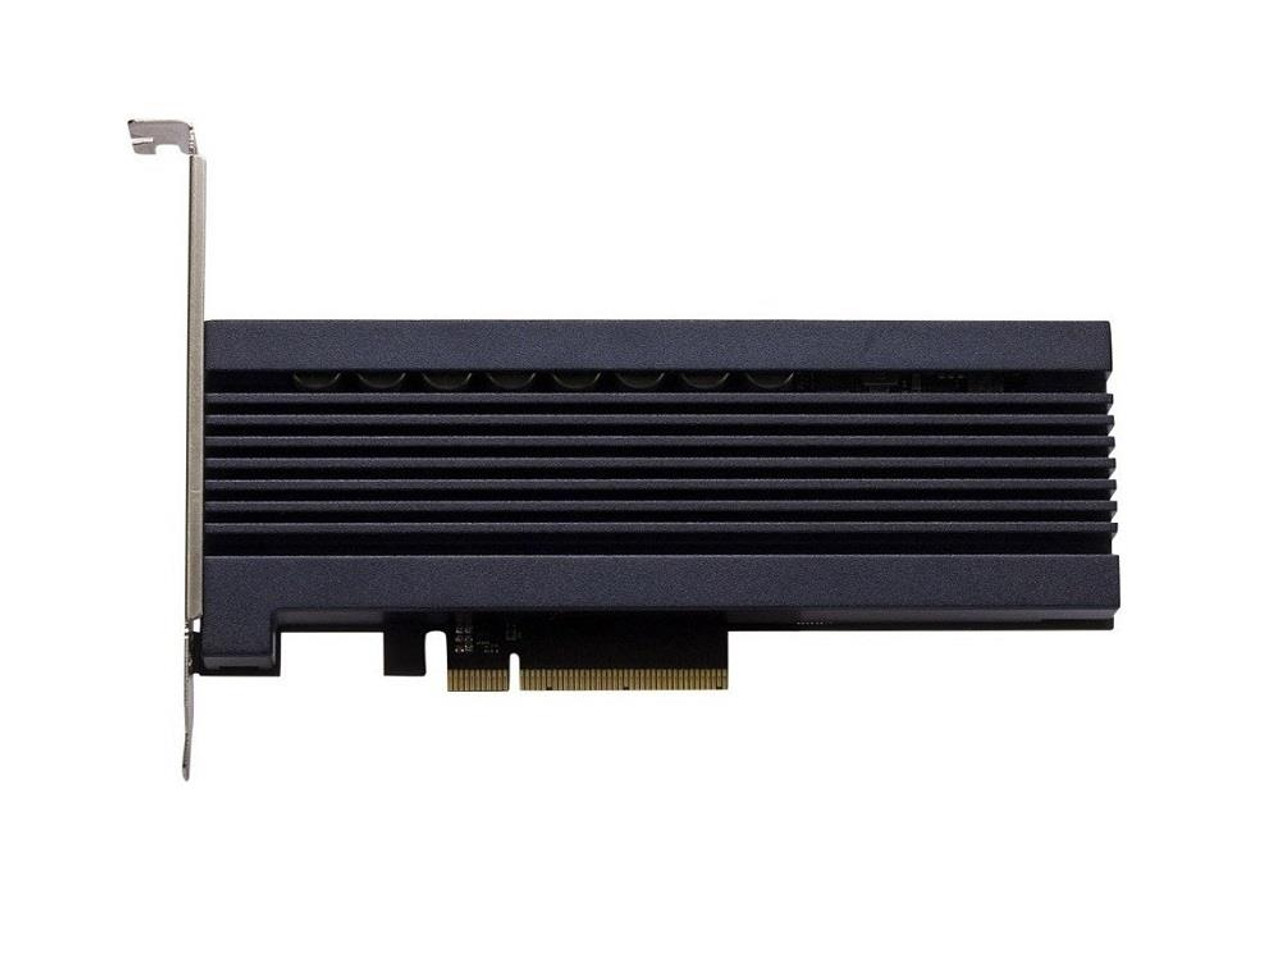 MZPLL6T4HMLA Samsung Enterprise PM1725b Series 6.4TB TLC PCI Express 3.0 x8 NVMe (PLP) Add-in Card Solid State Drive (SSD)